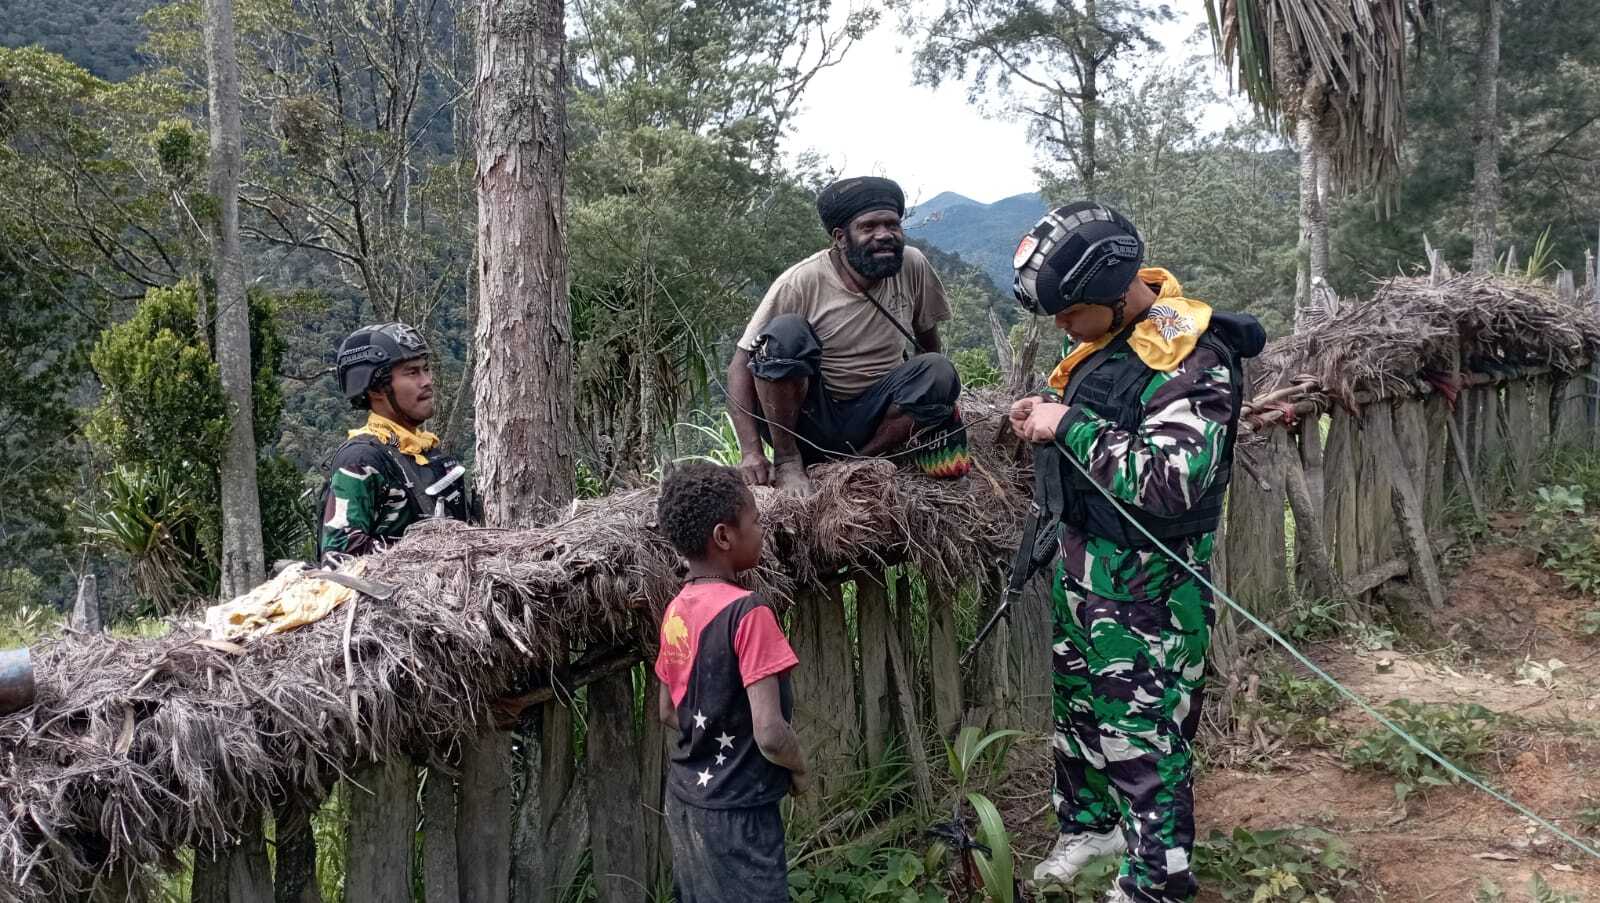 Satgas Mobile Raider 300 Siliwangi Bantu Warga Pasang Instalasi Listrik di Pegunungan Tengah Papua